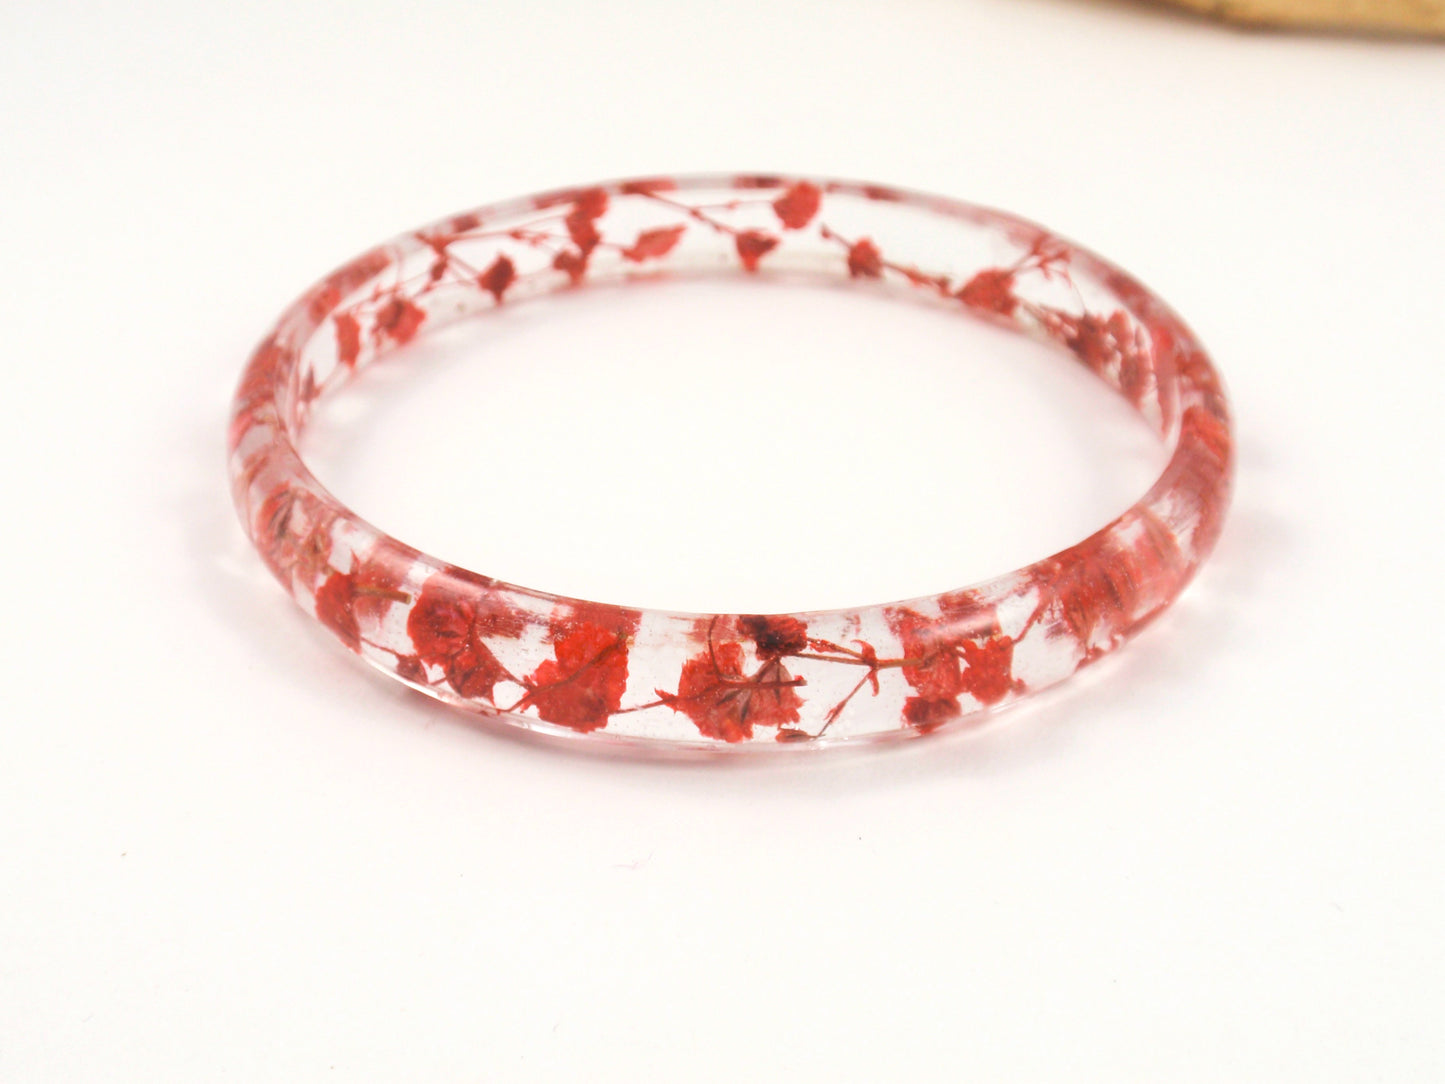 Red pressed flower resin bangle Bracelet, Botanical bracelet